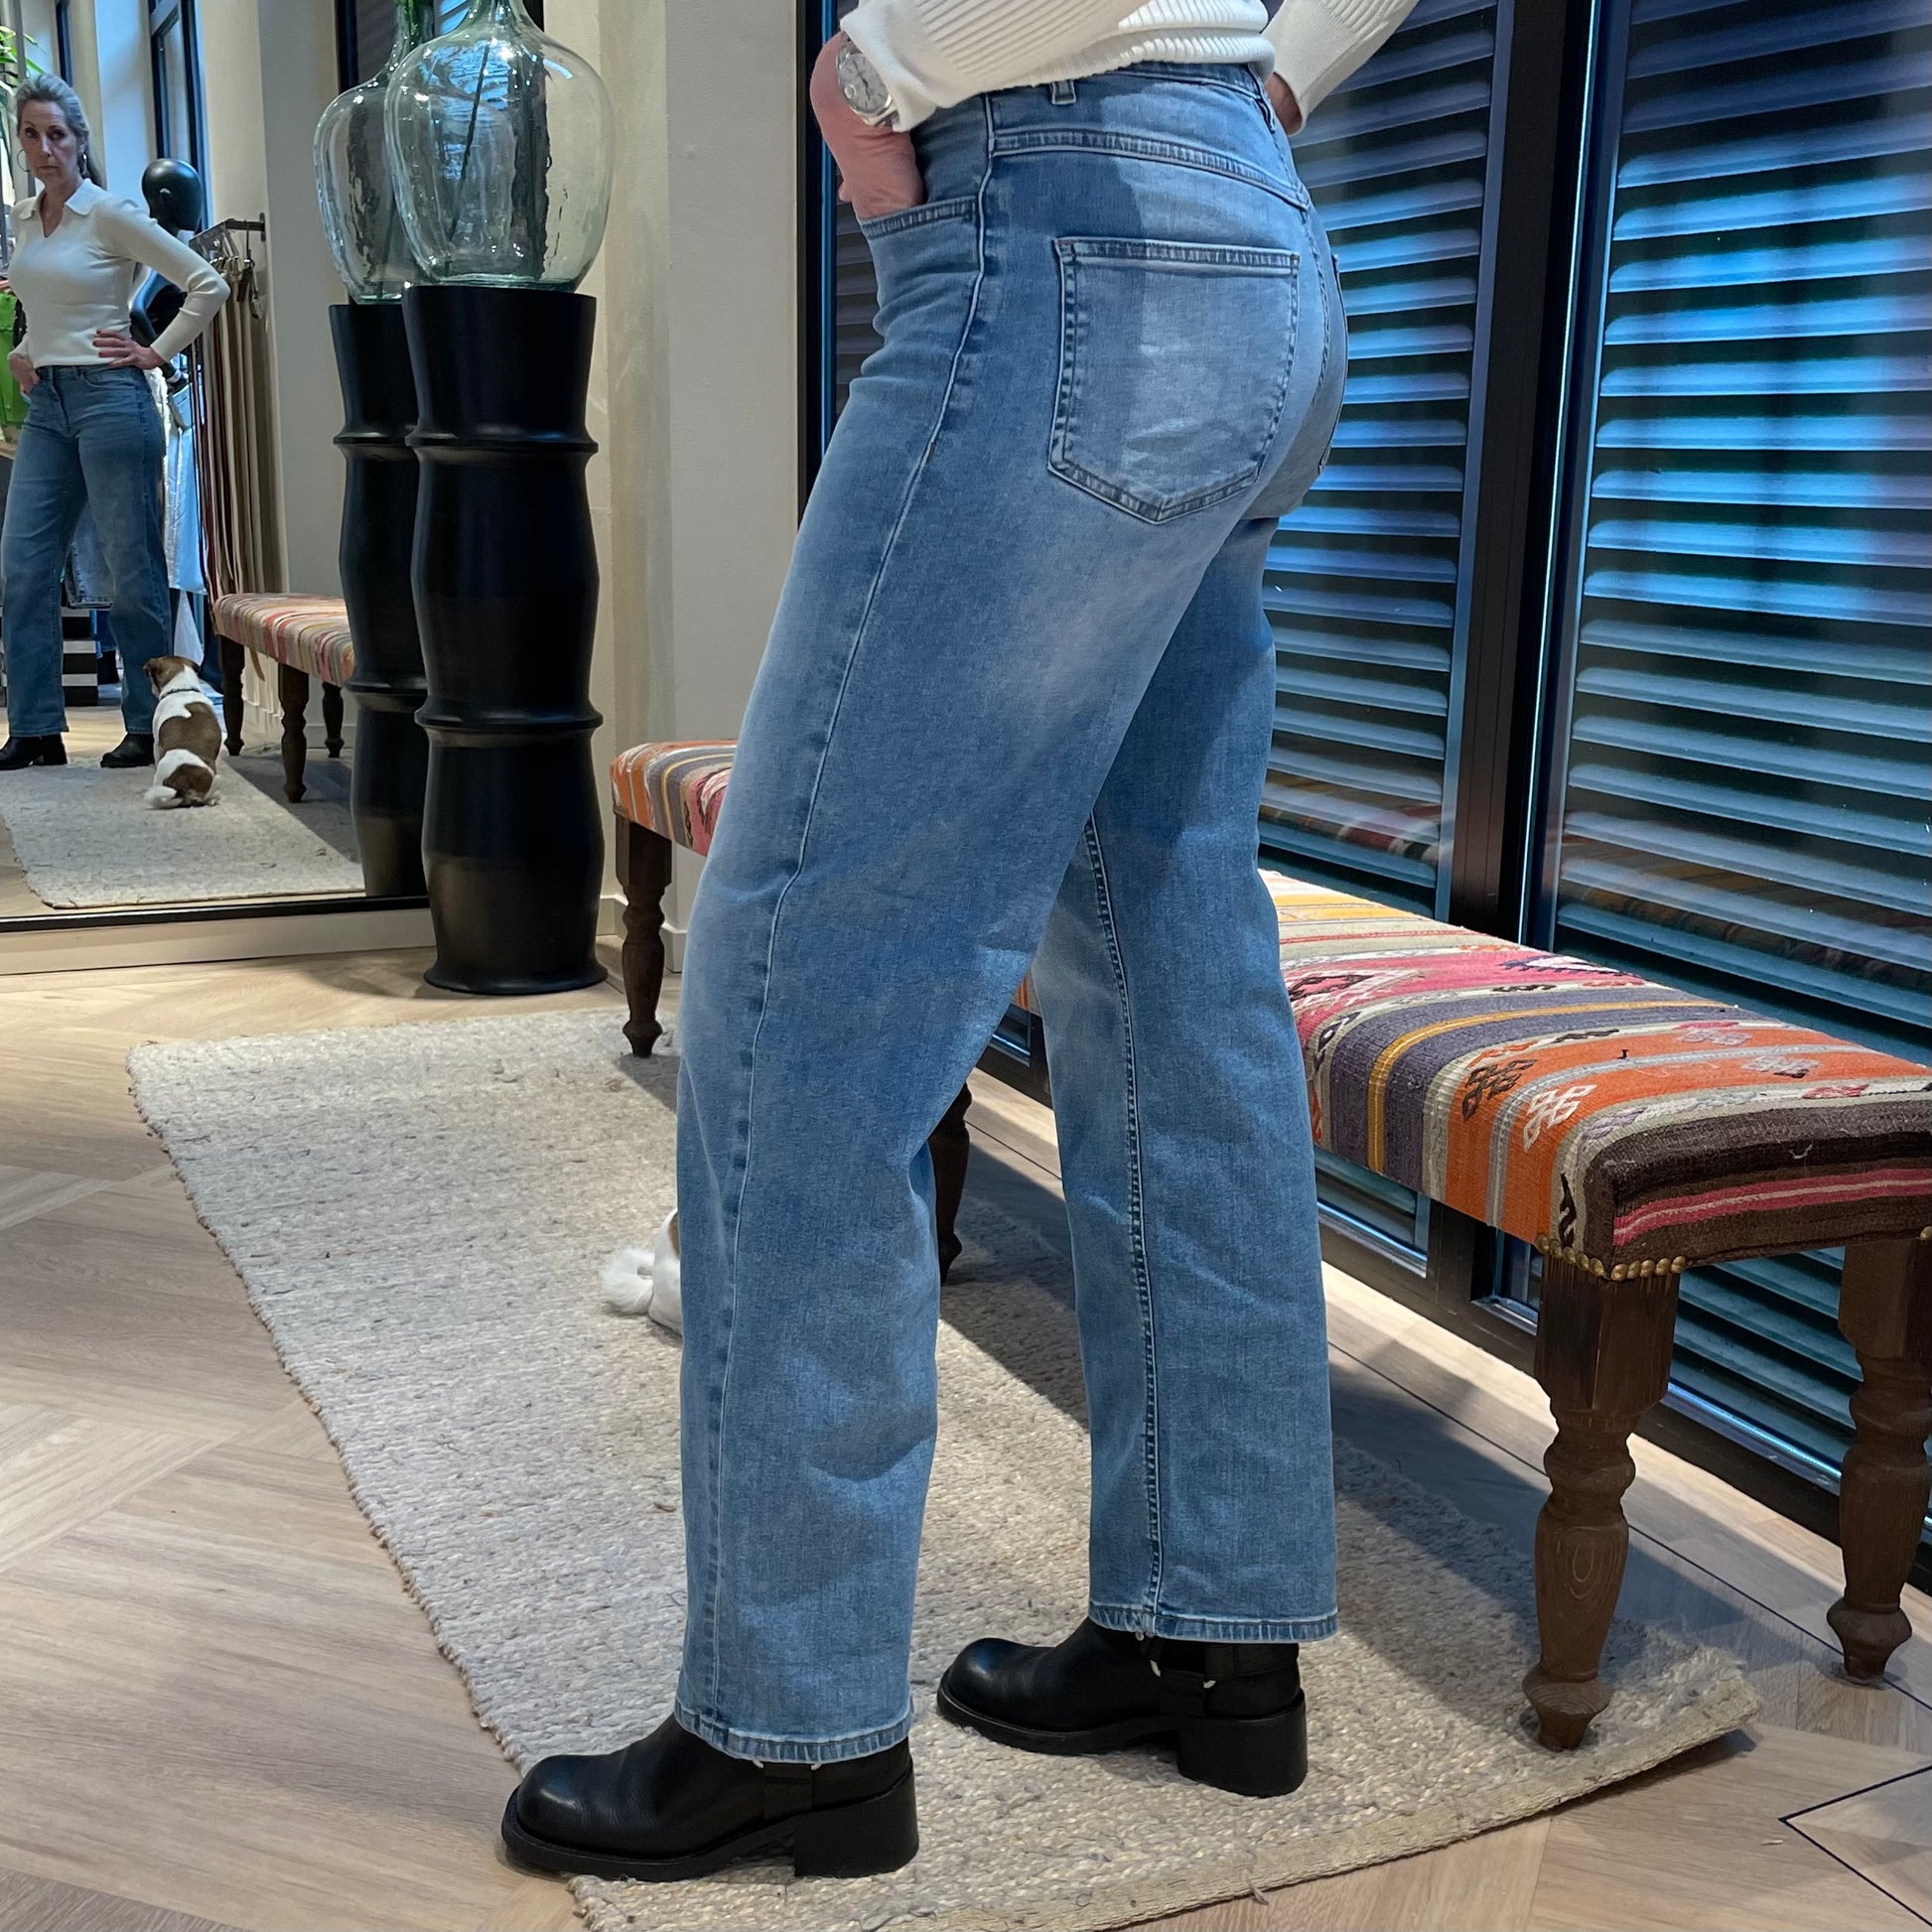 Ichi Jeans Twiggy Straight - Peet kleding